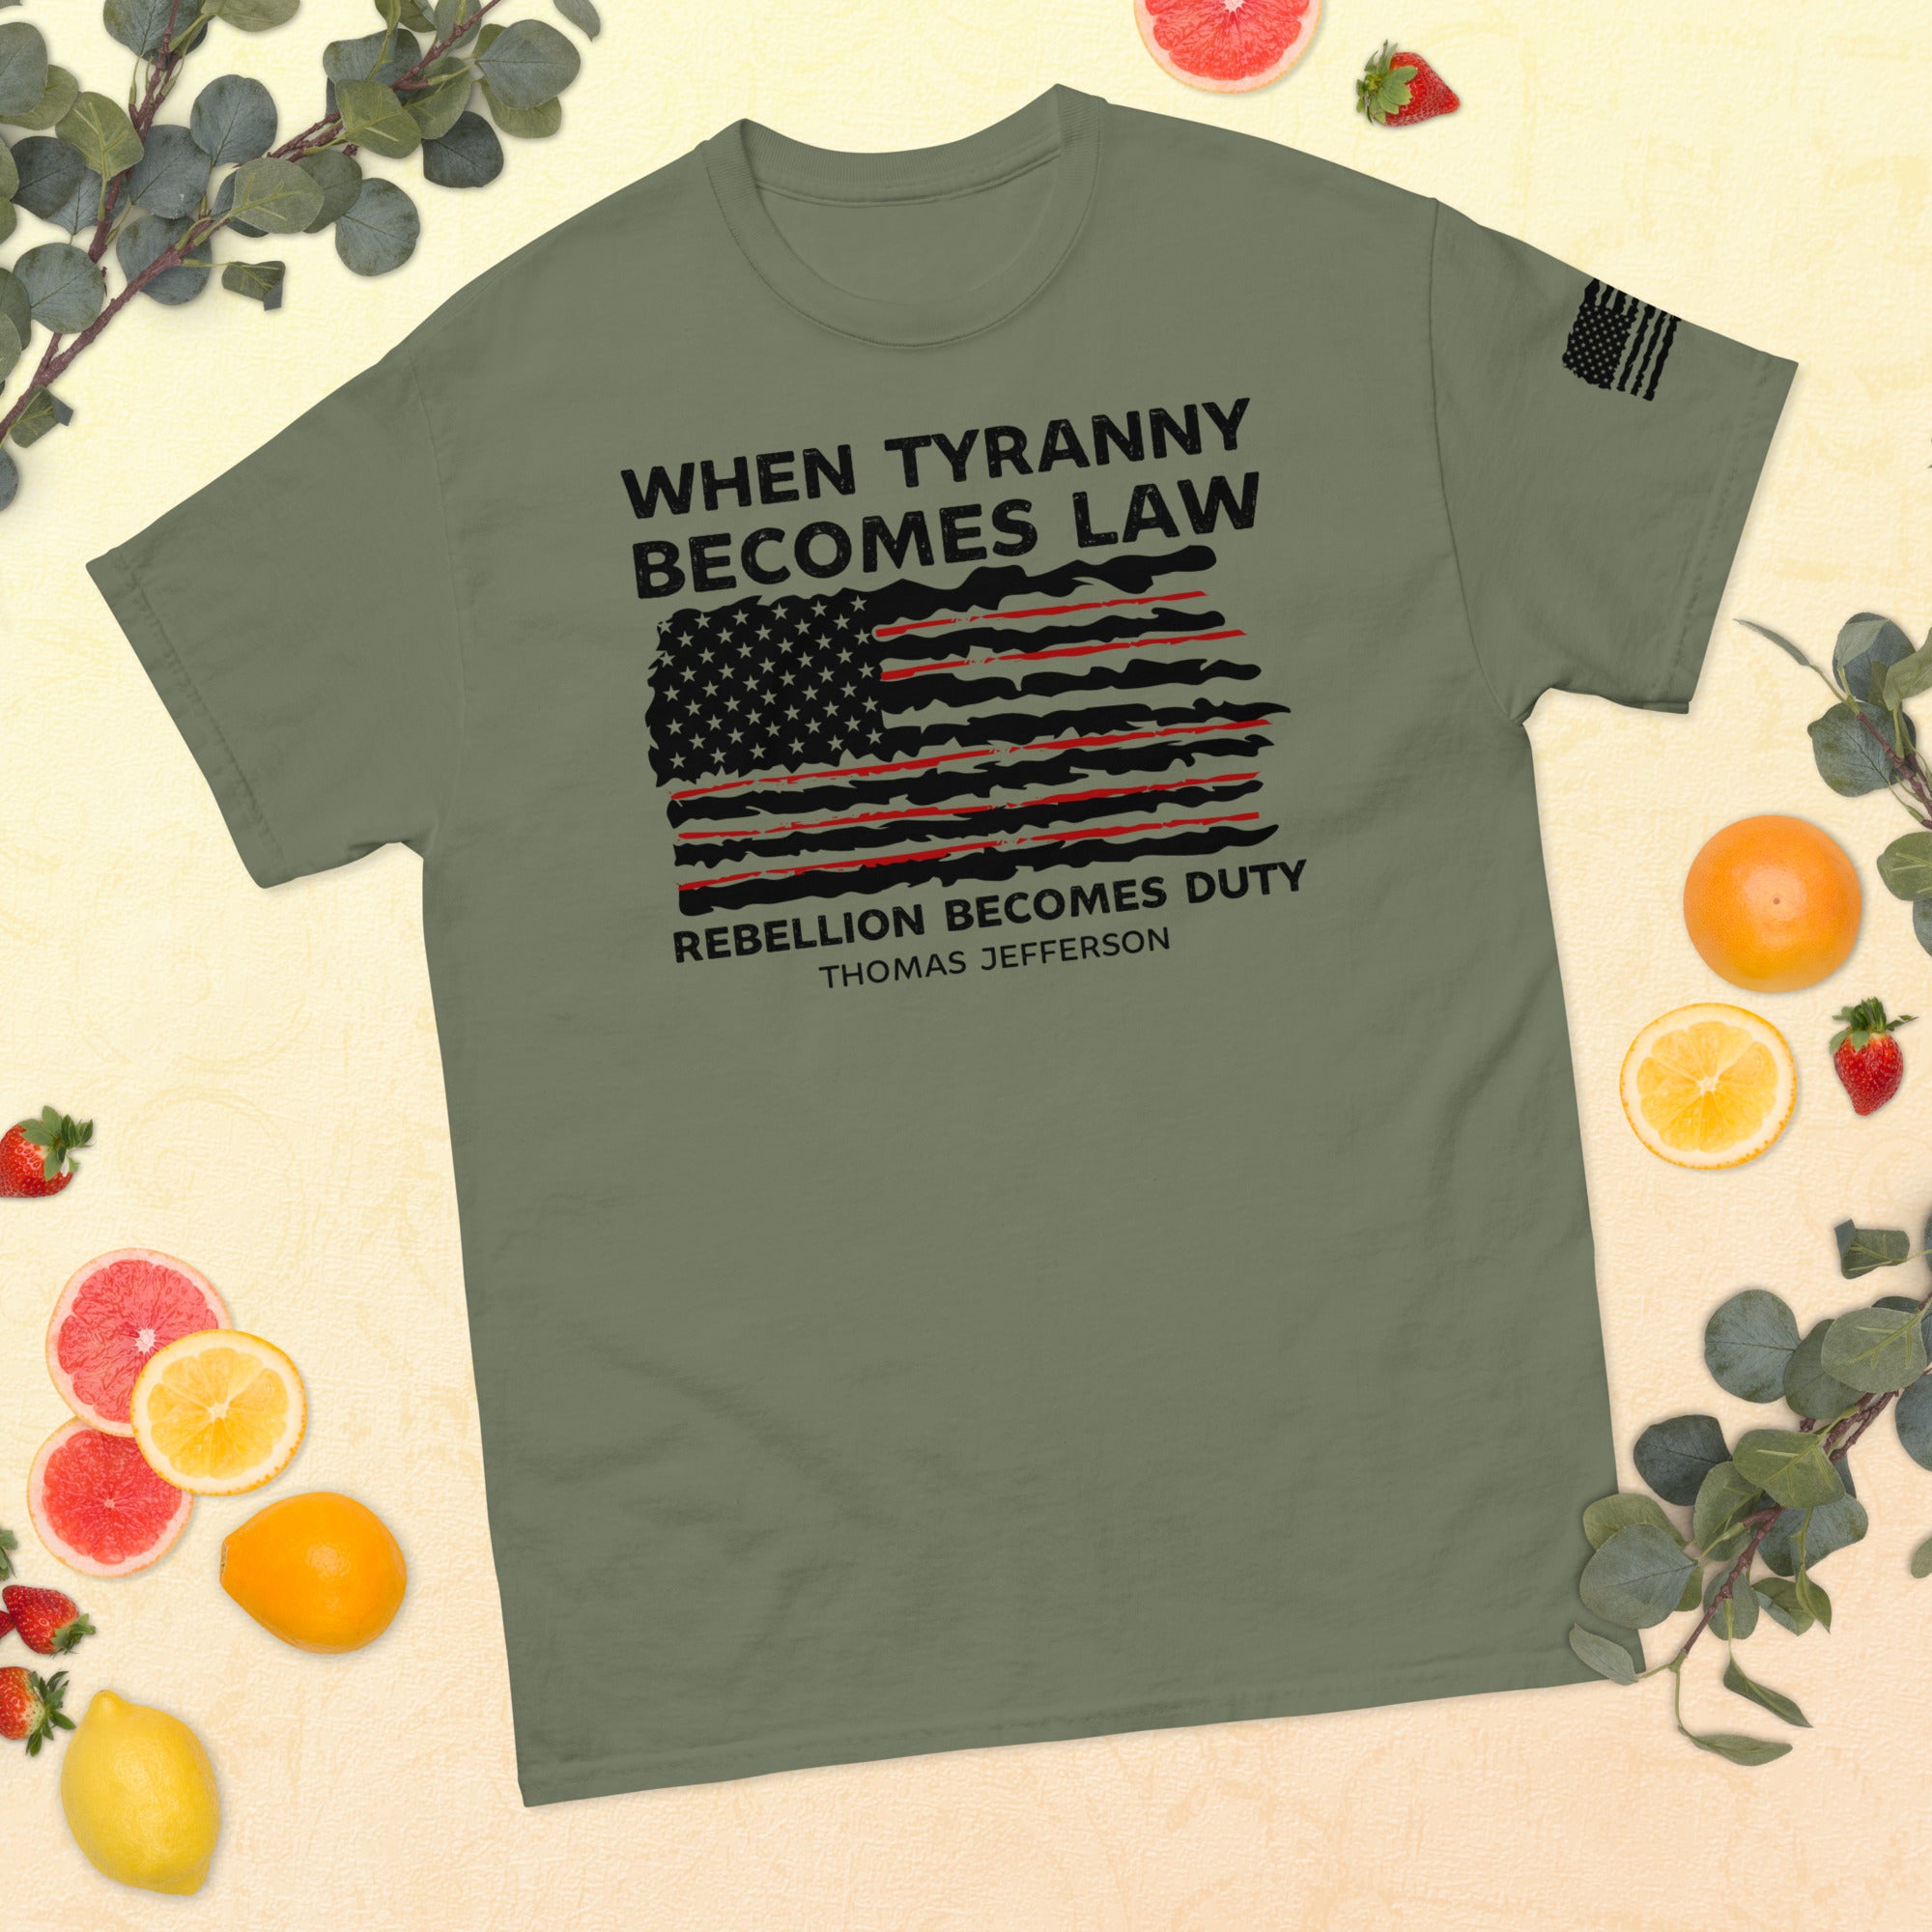 When Tyranny Becomes Law, Rebellion Becomes Duty, 1776 Shirt, Thomas Jefferson Shirt, Political Shirts, Tyranny Shirt, Rebellion Shirt